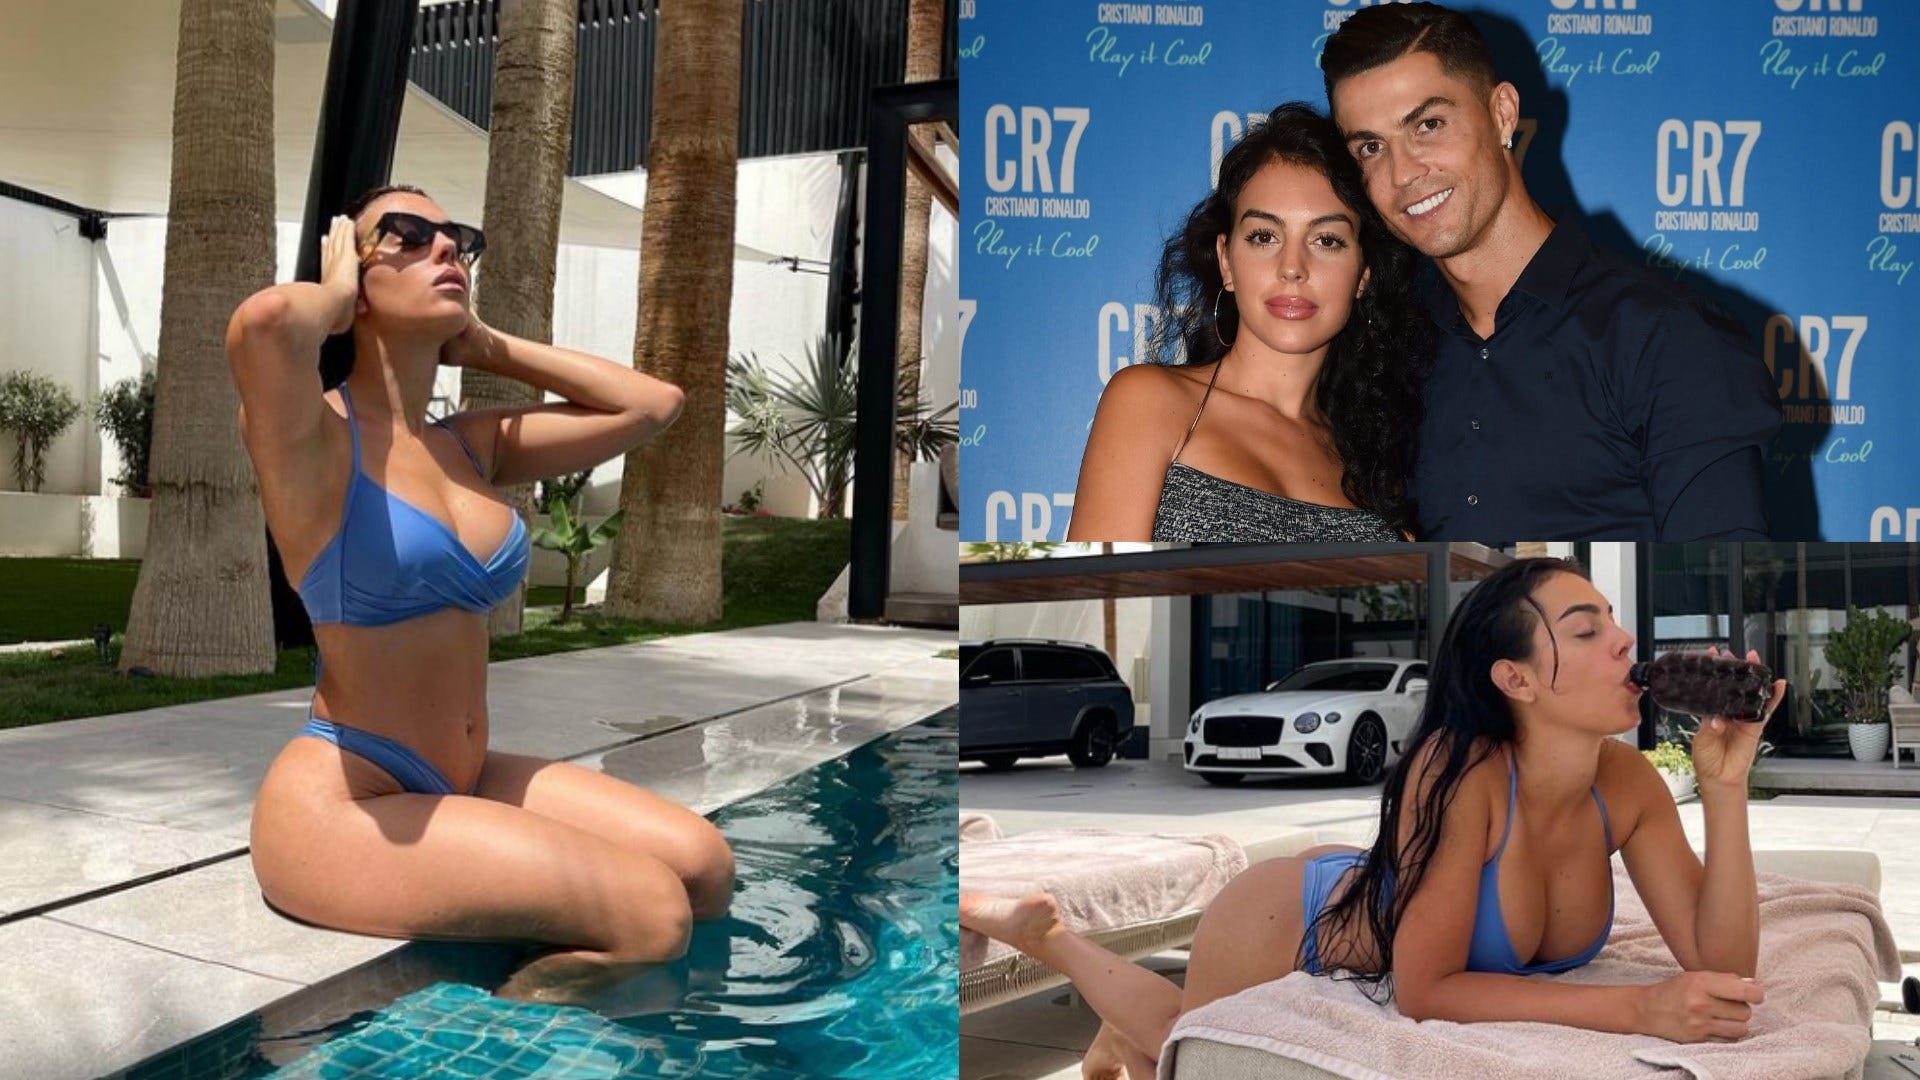 Cristiano Ronaldos girlfriend Georgina Rodriguez posts racy bikini pictures on Instagram as she risks breaking strict Saudi Arabian law Goal India image